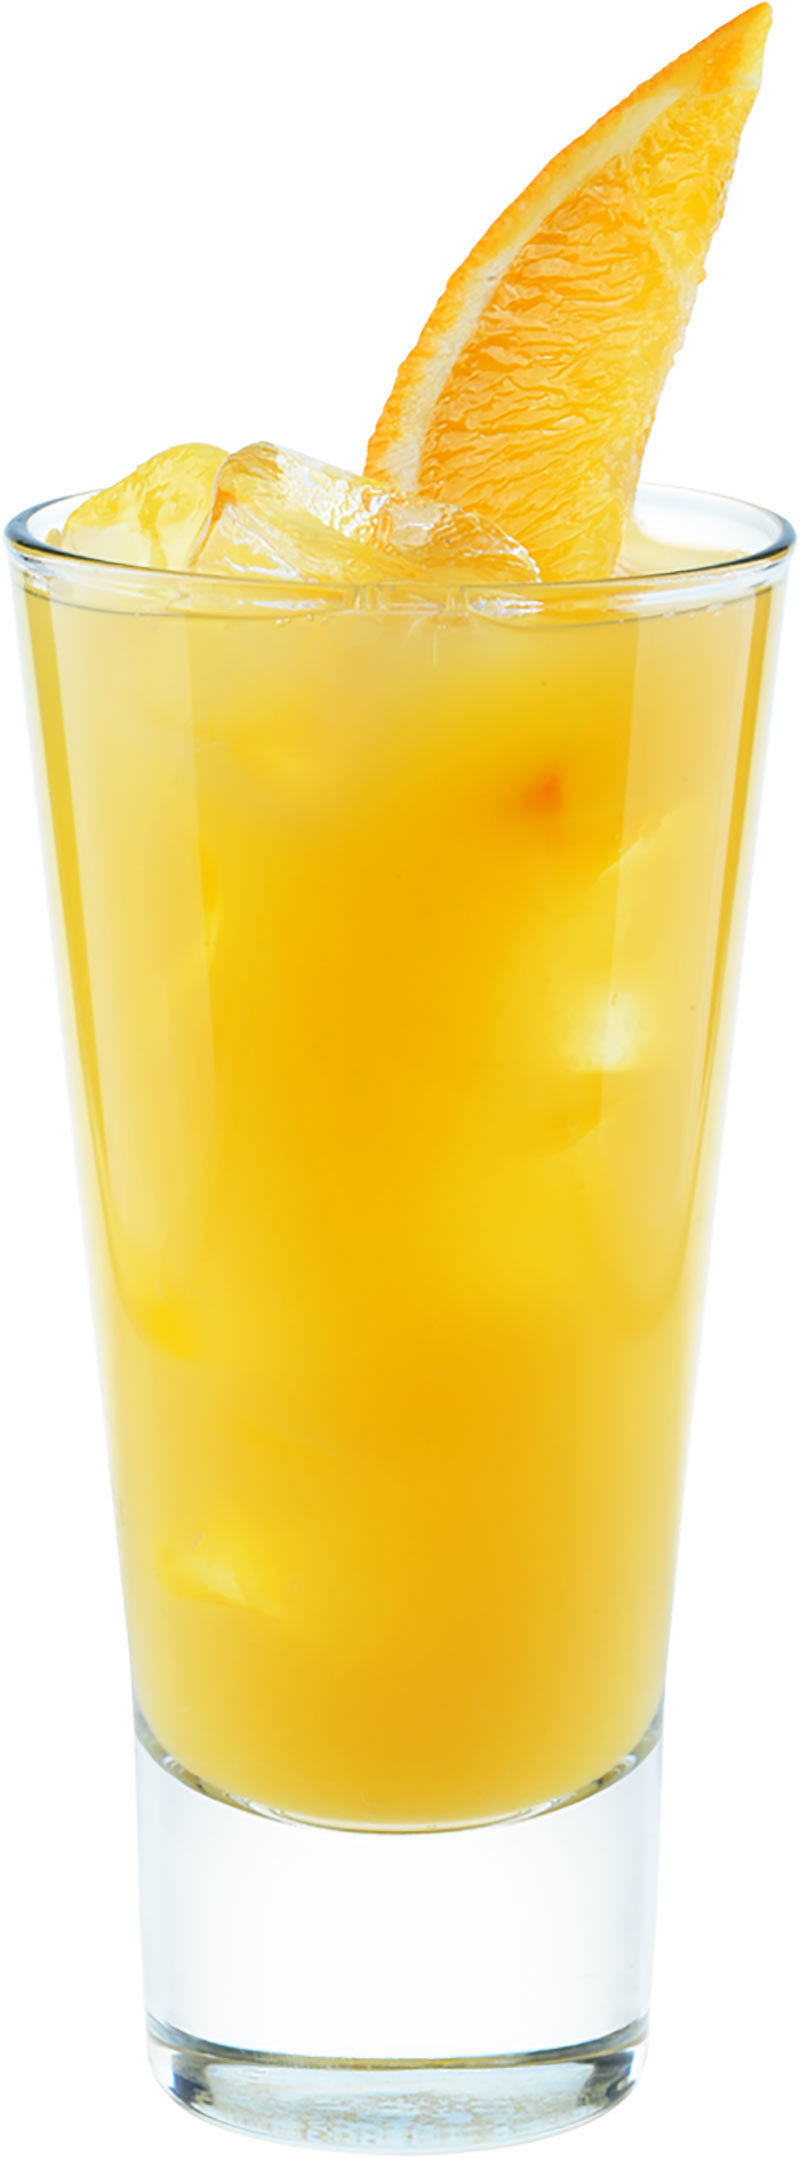 How to Make the Rum With Orange Juice